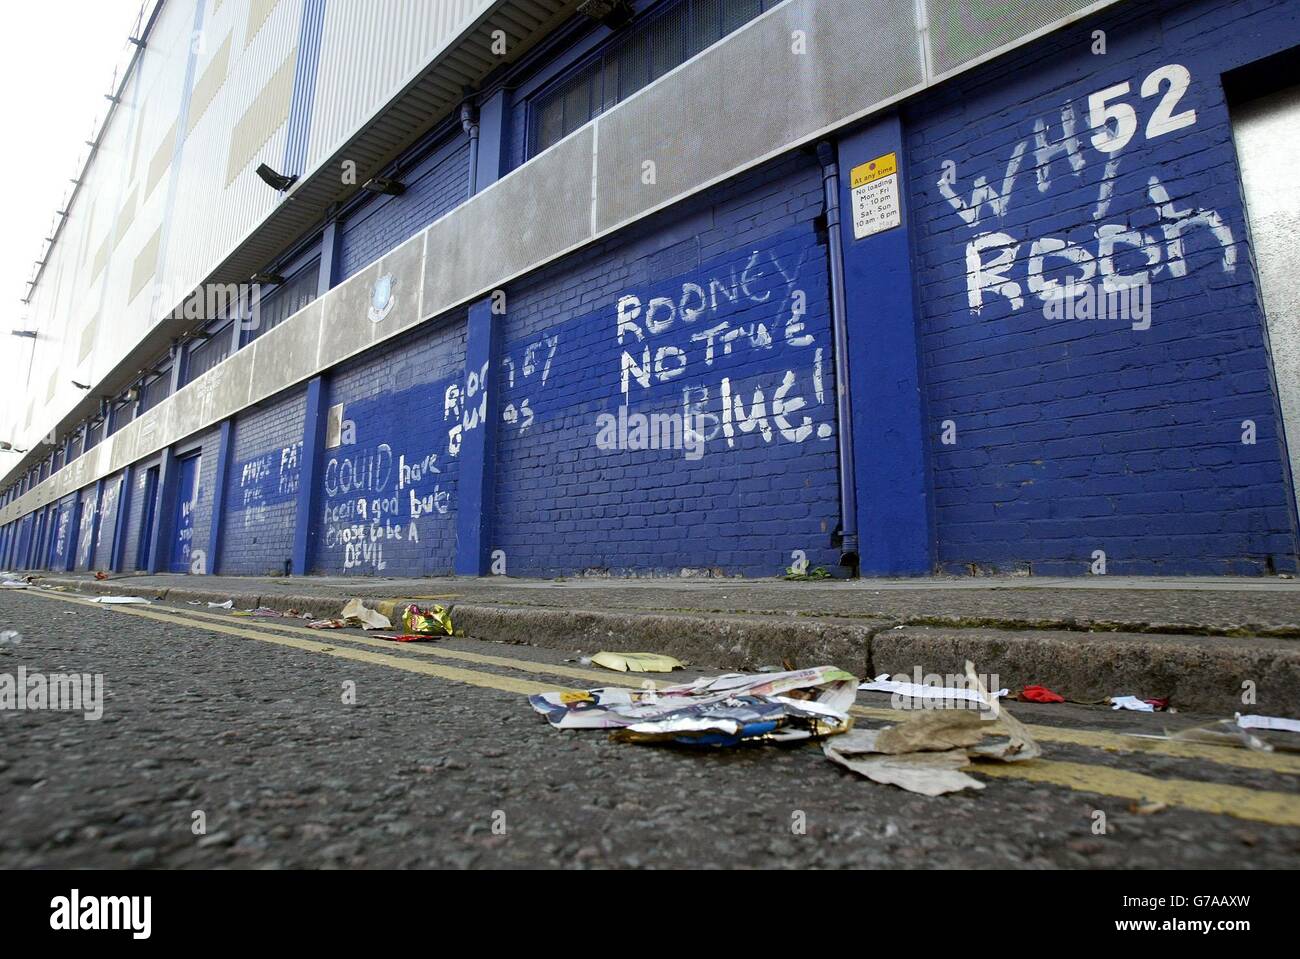 graffiti-on-the-walls-of-goodison-park-home-of-everton-football-club-G7AAXW.jpg